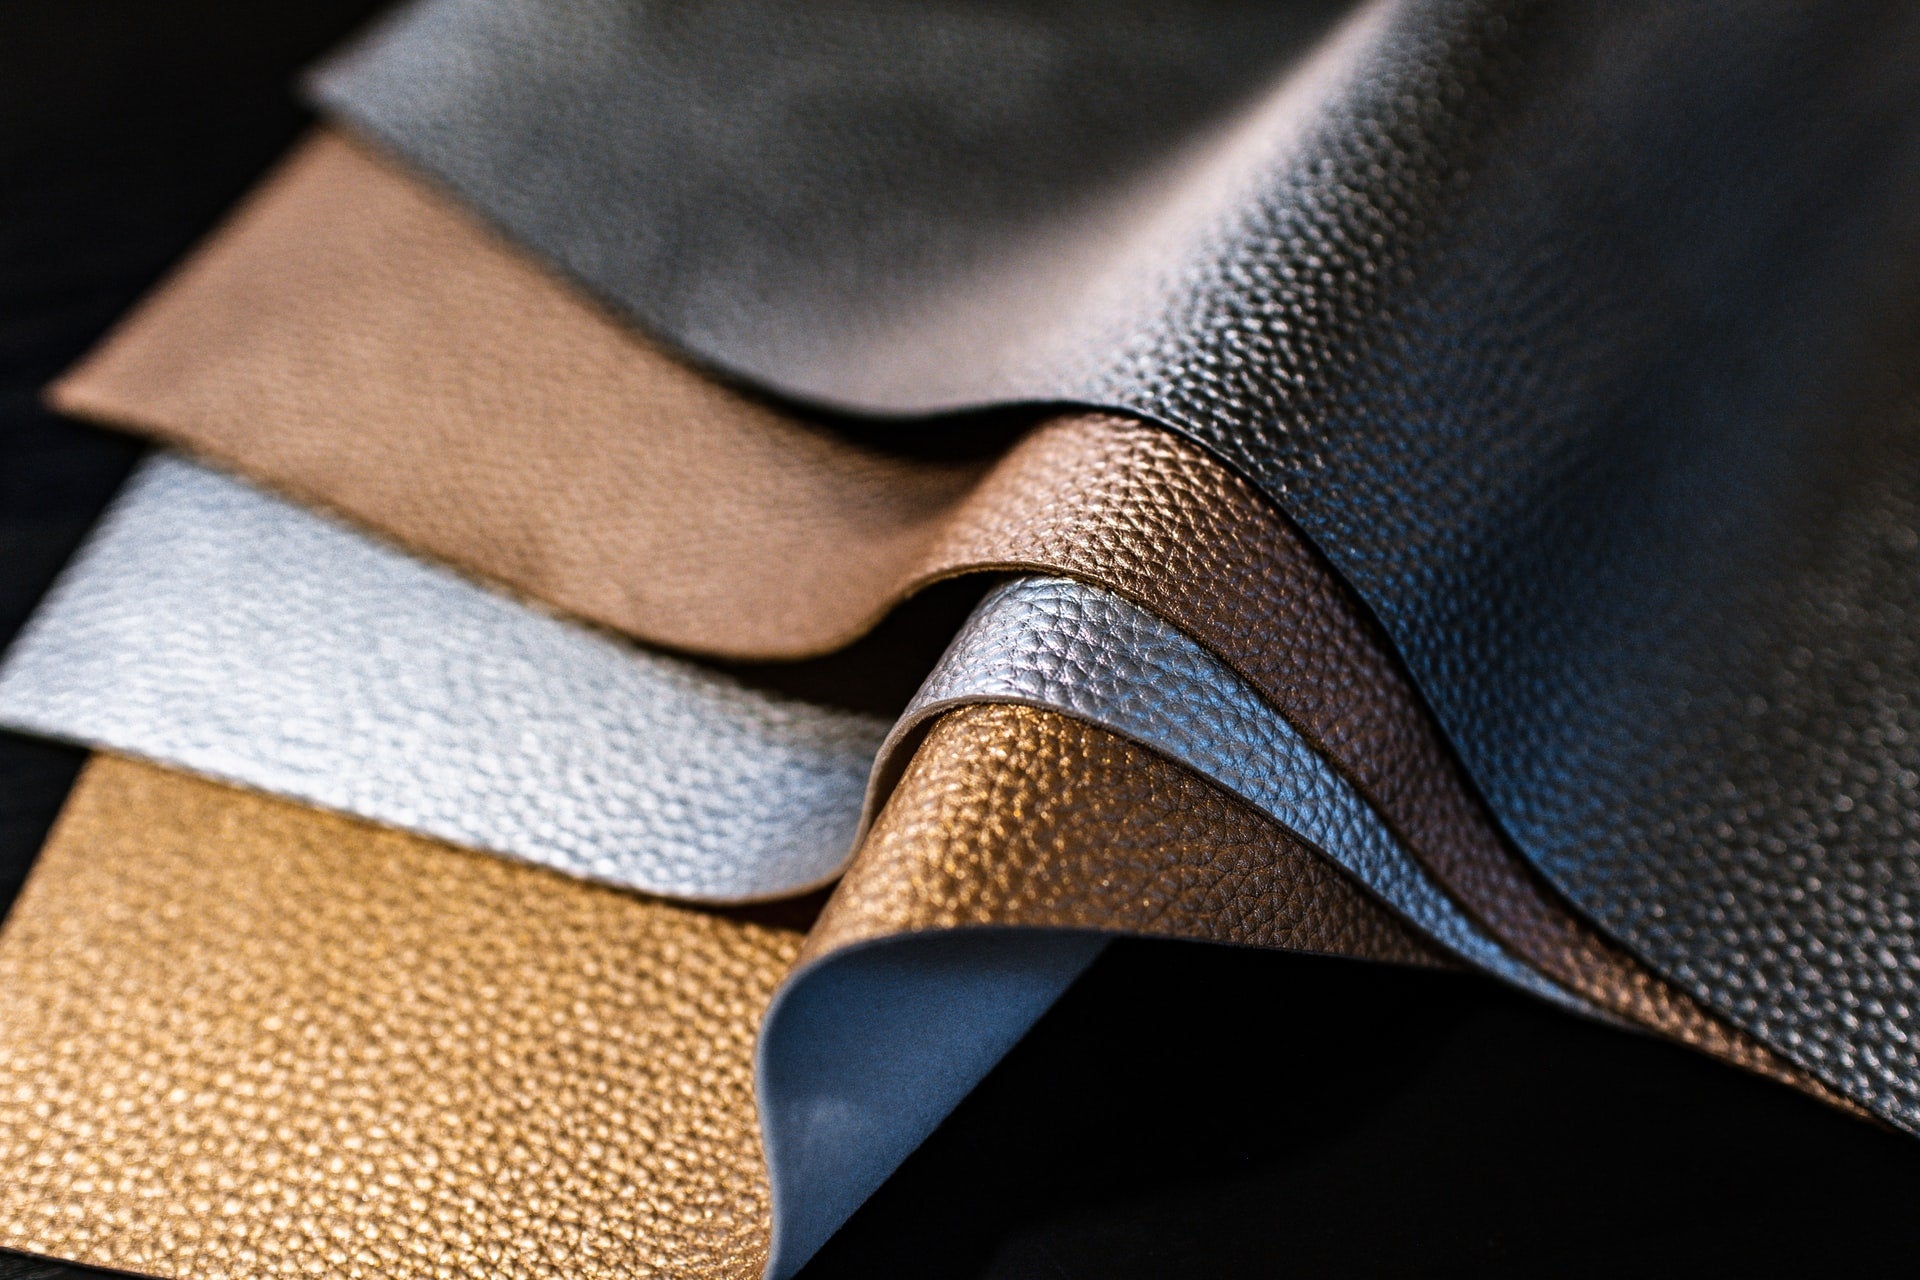 Louis Vuitton Leather Fabric -  Ireland